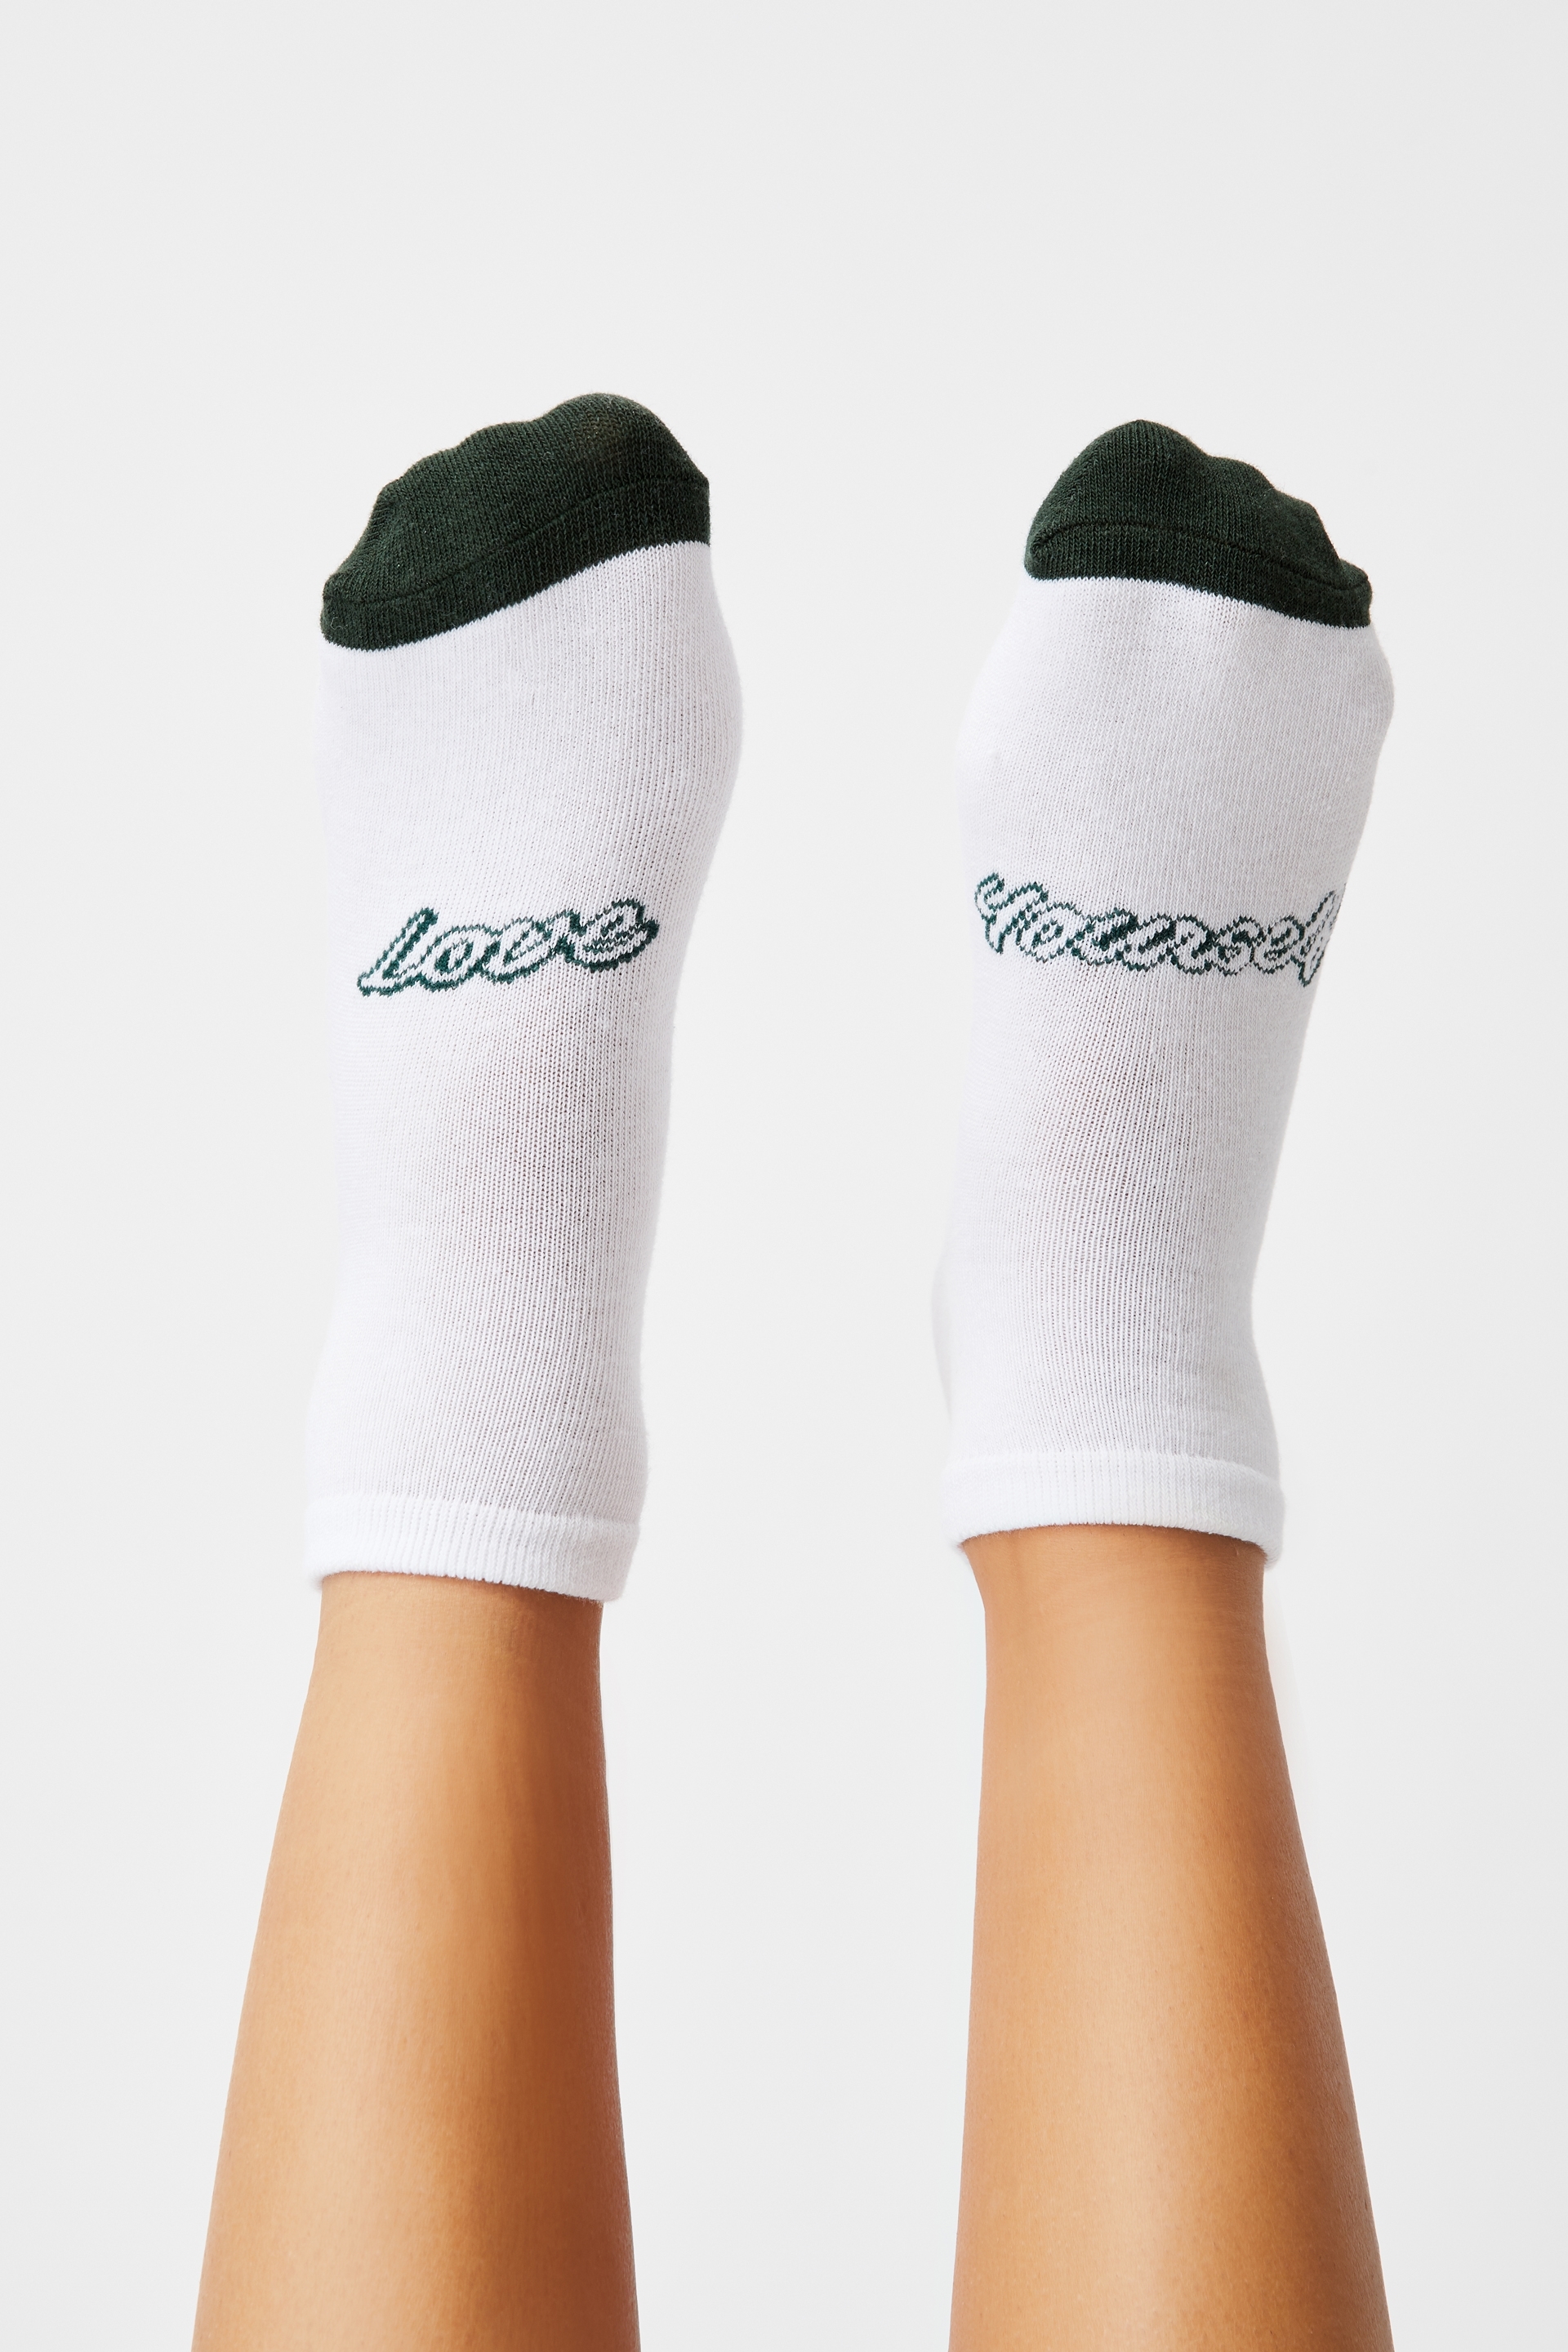 Factorie - Anklet Original Sock - White/love yourself